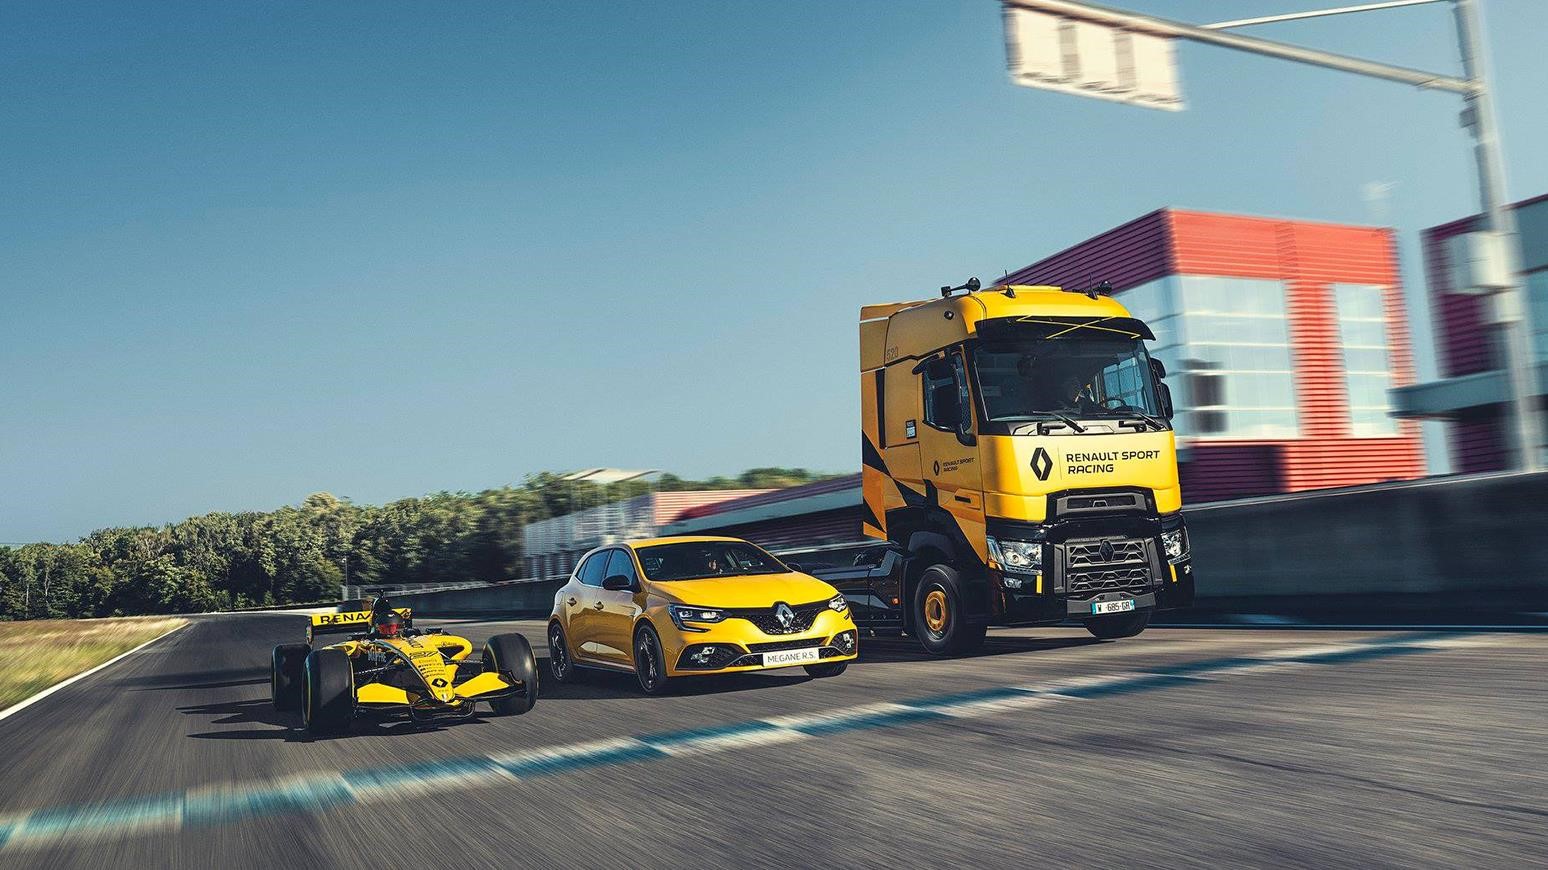 Renault Sport Racing Headlines Firm’s Stand At Truckfest 2019 In Peterborough